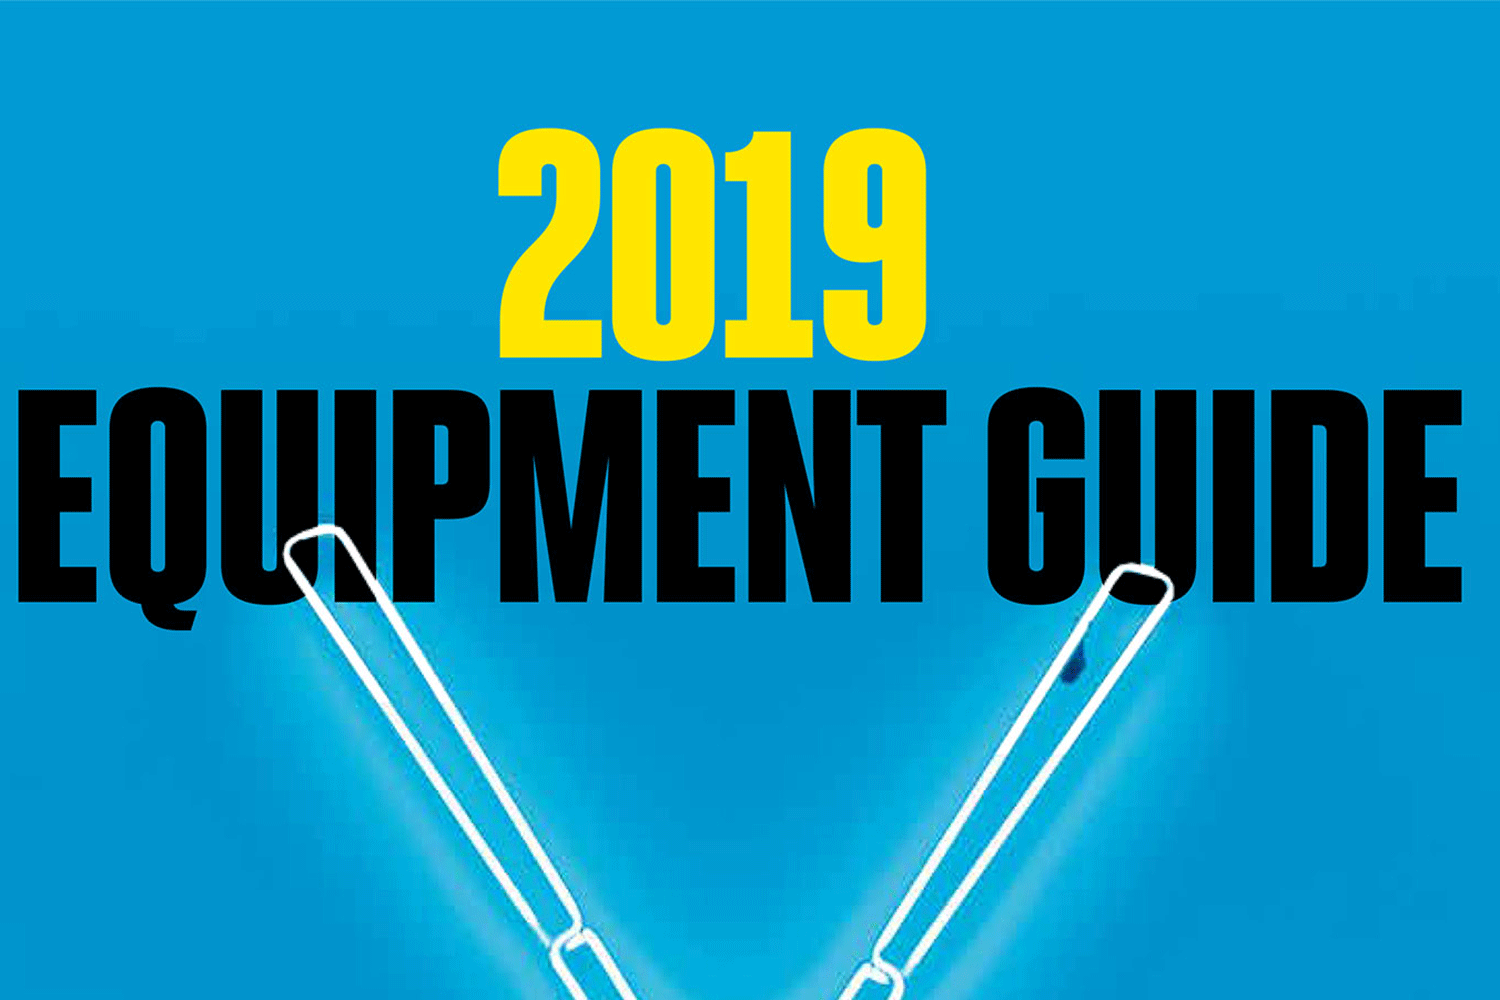 2019 Equipment Guide